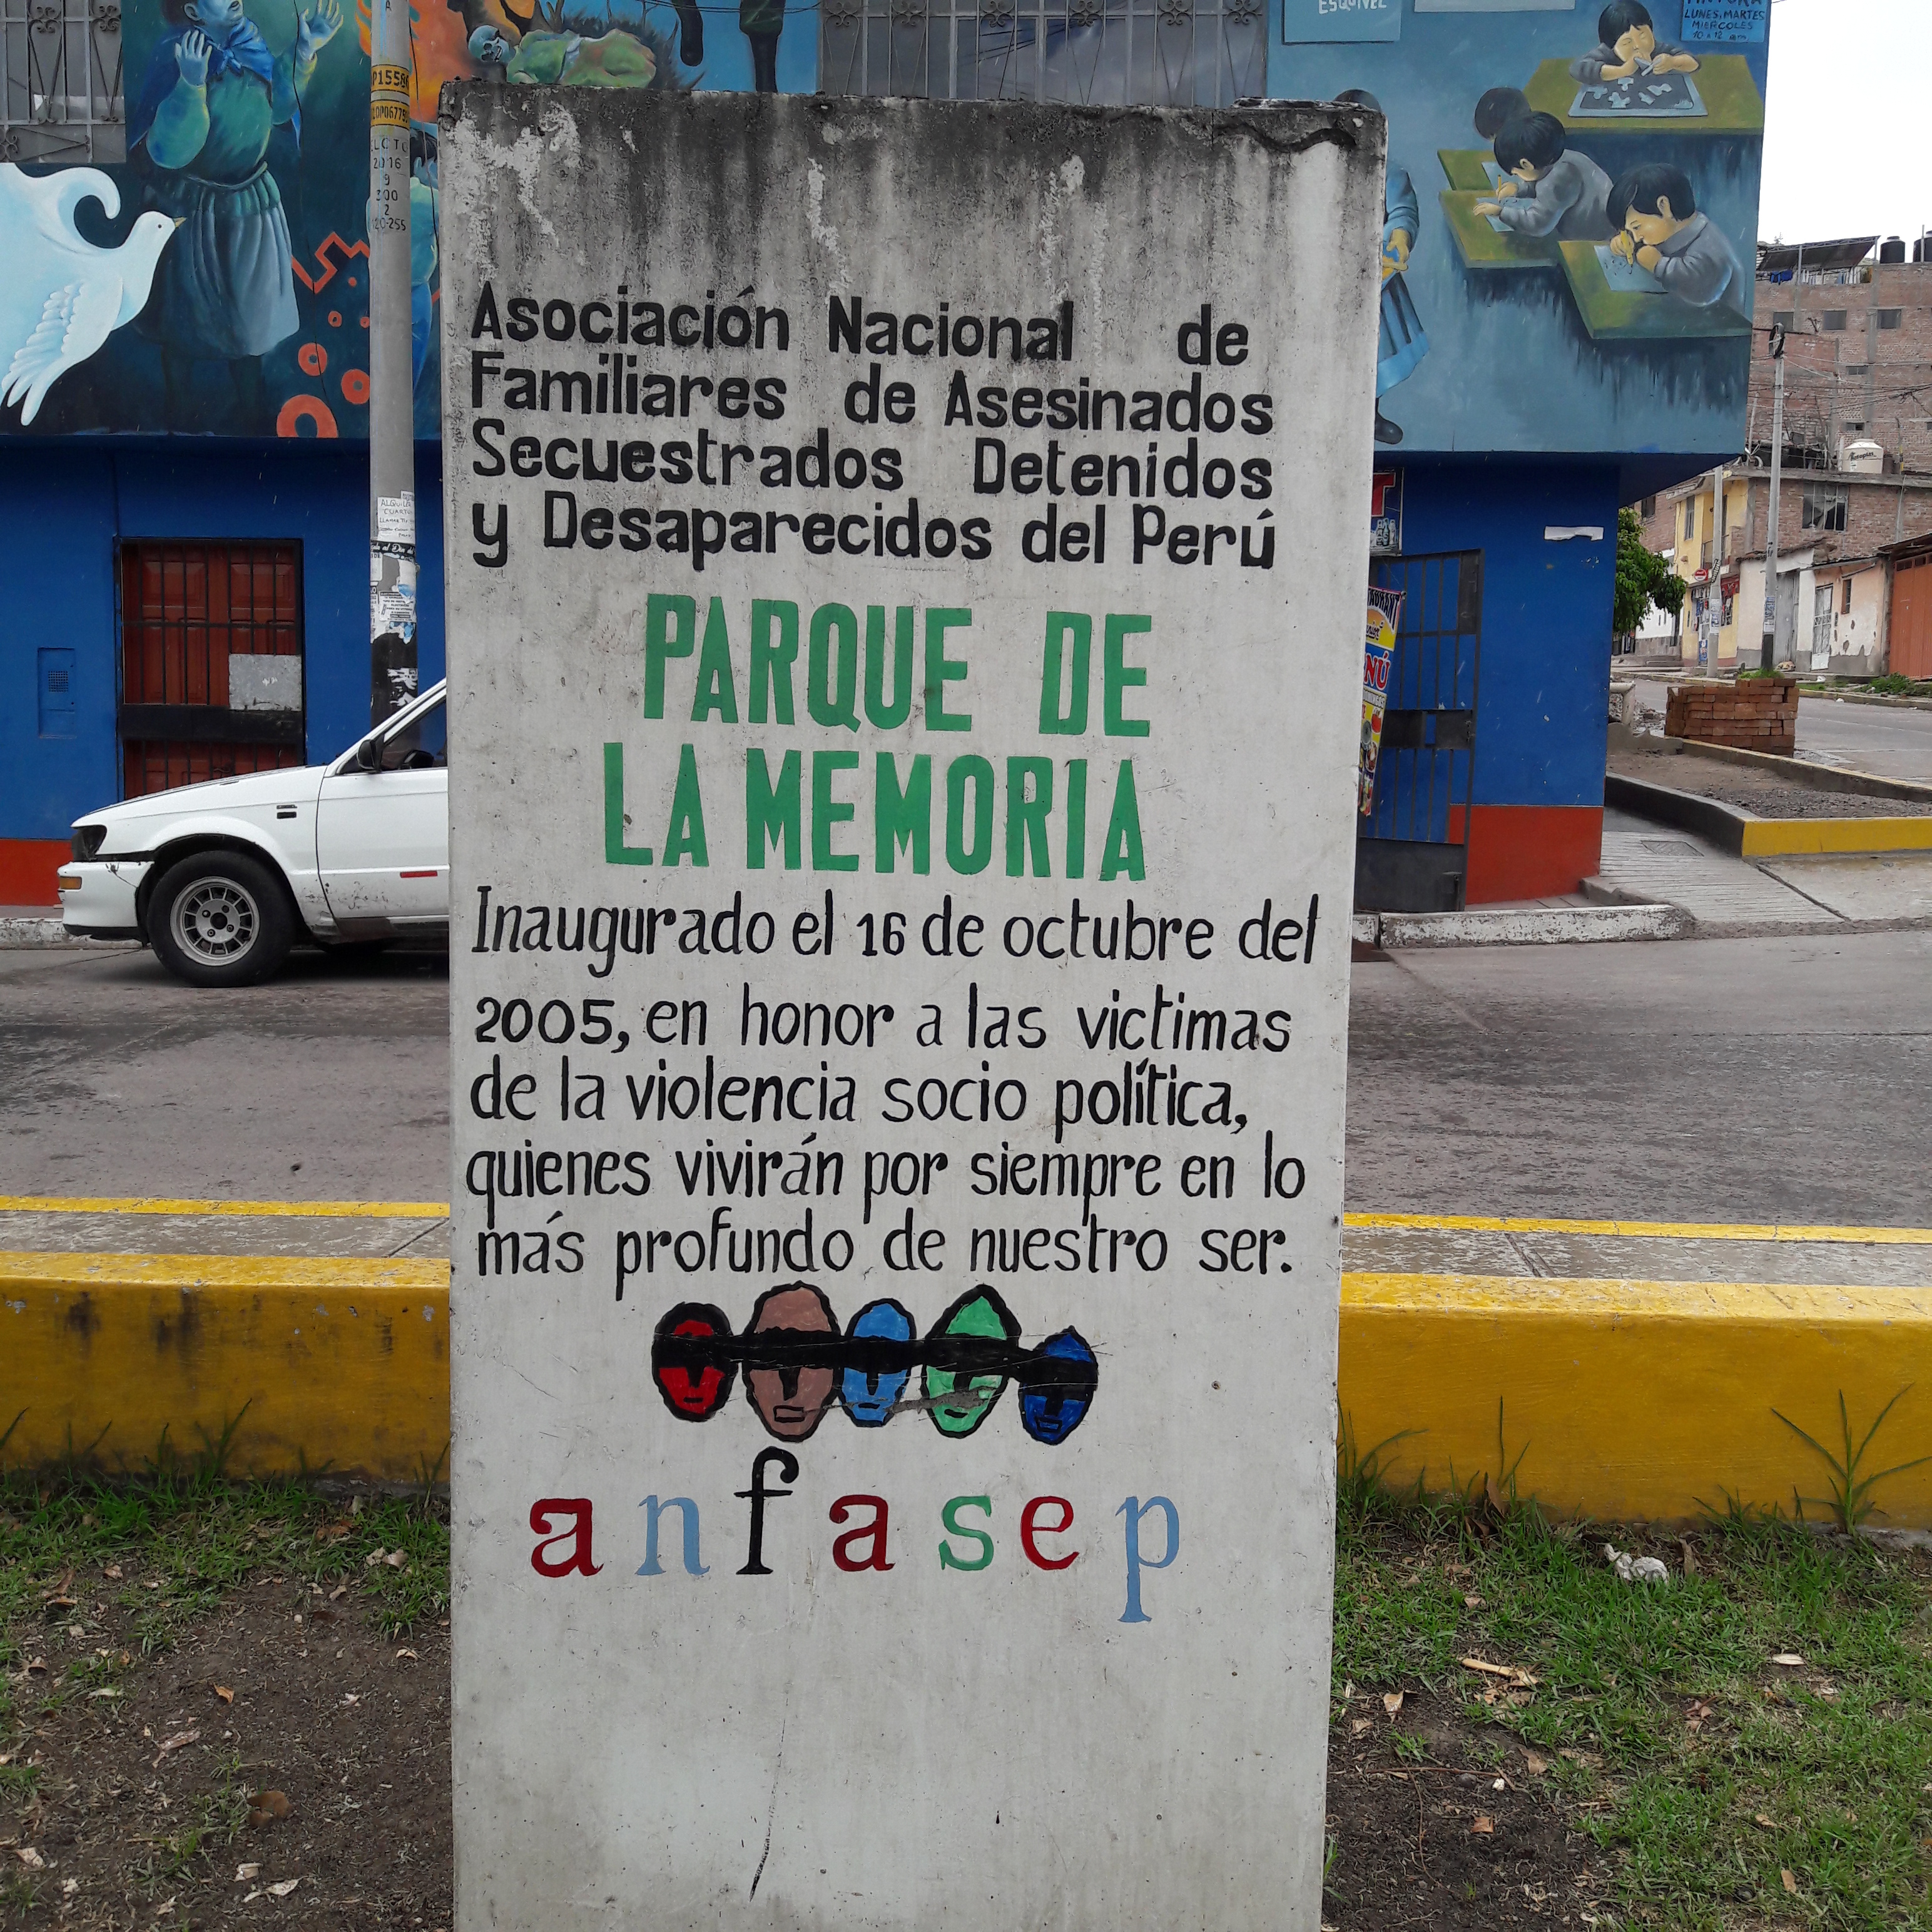 a sign in spanish saying "Parque de la Memoria"